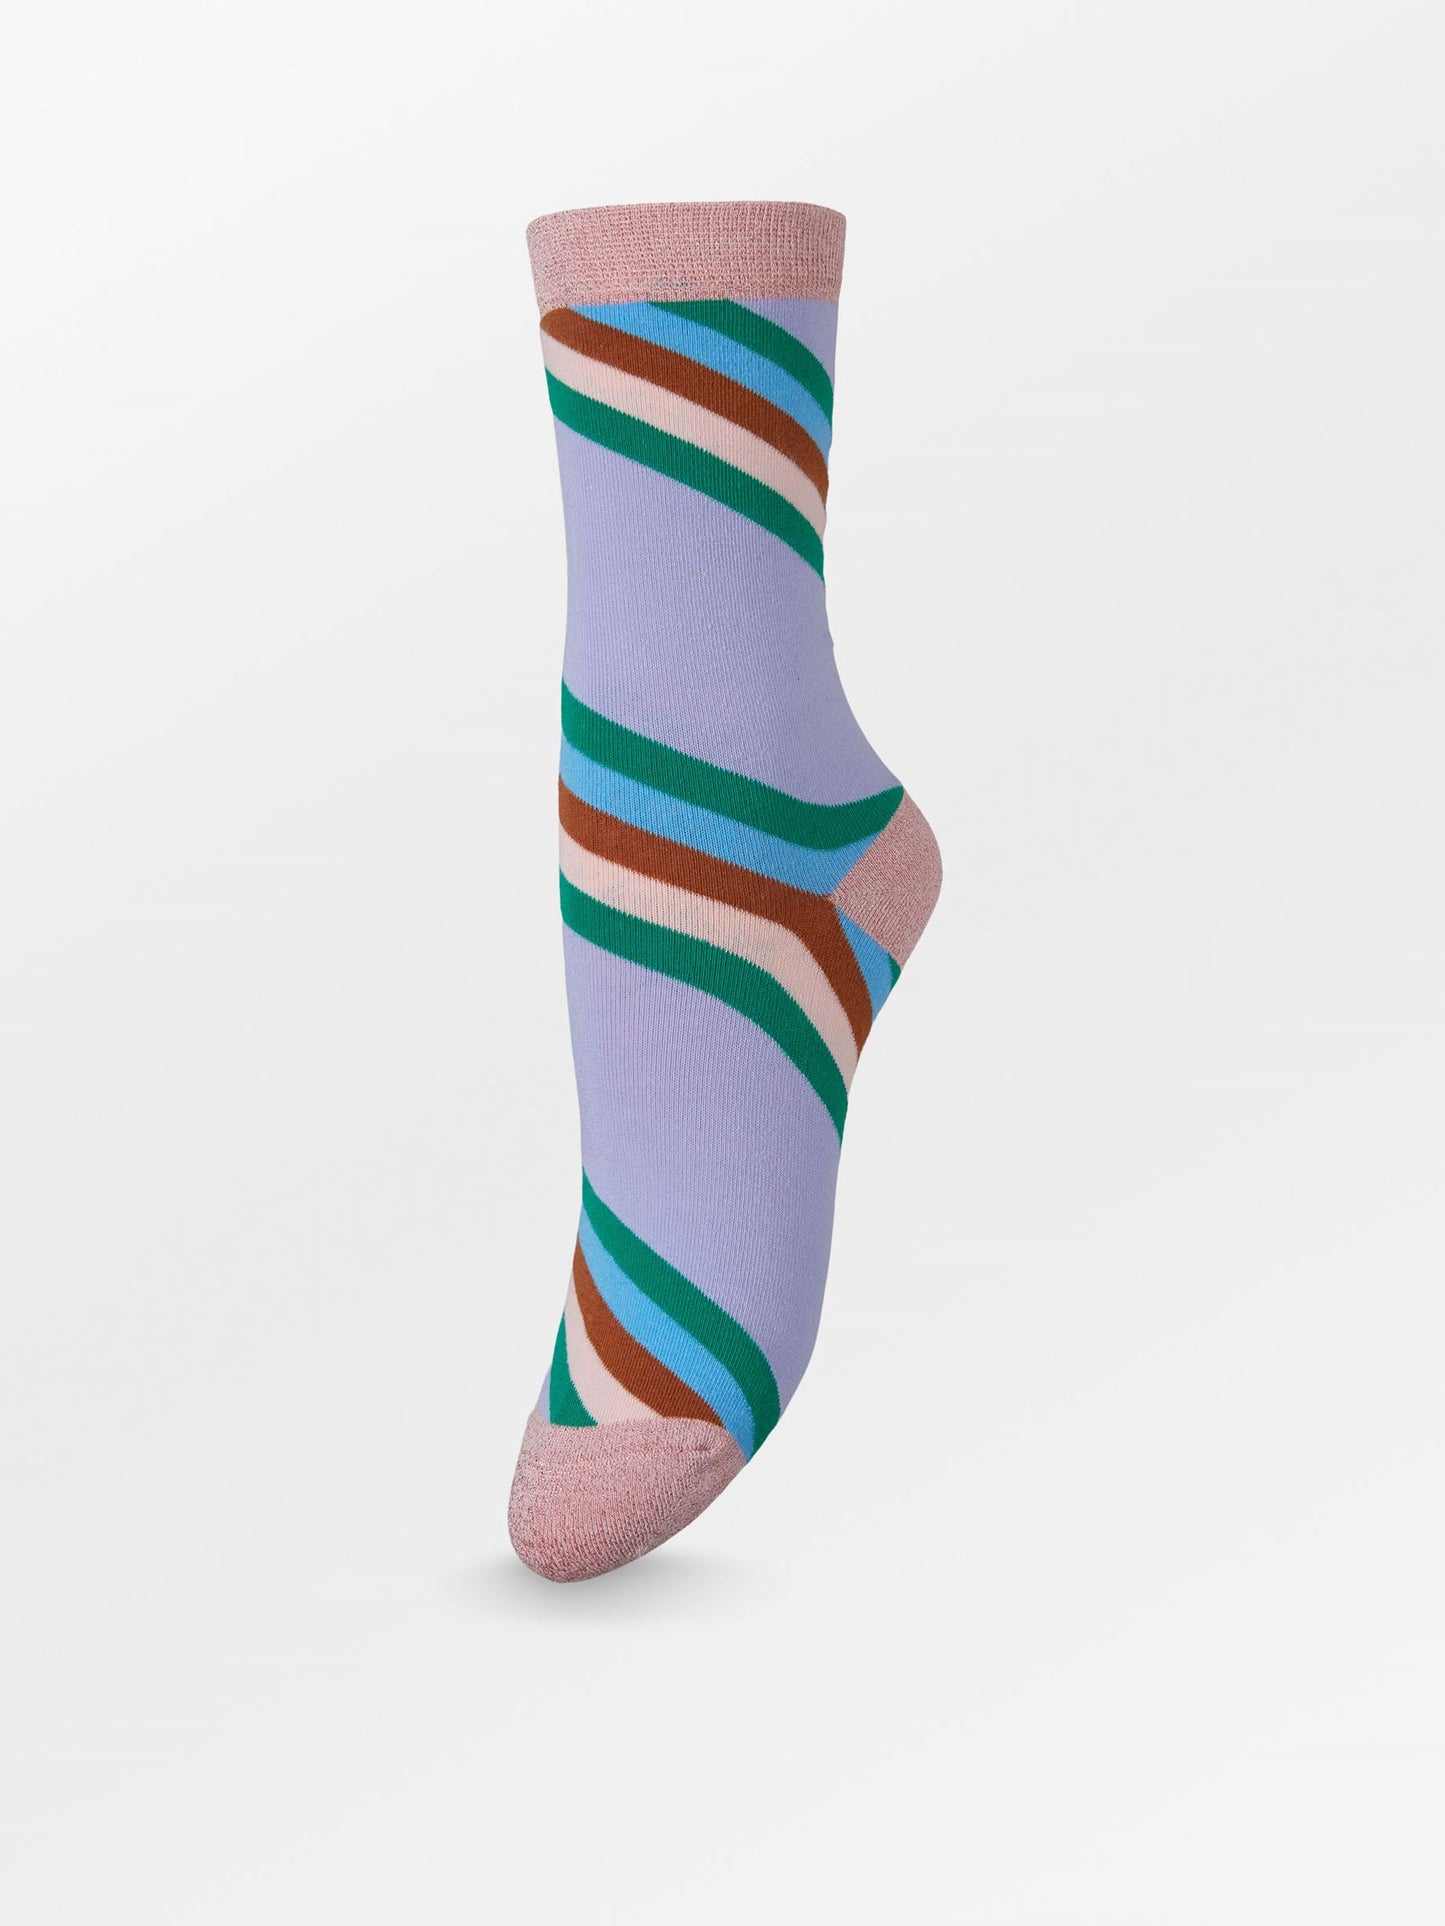 Becksöndergaard, Oblique Striped sock - Lavender, archive, archive, sale, sale